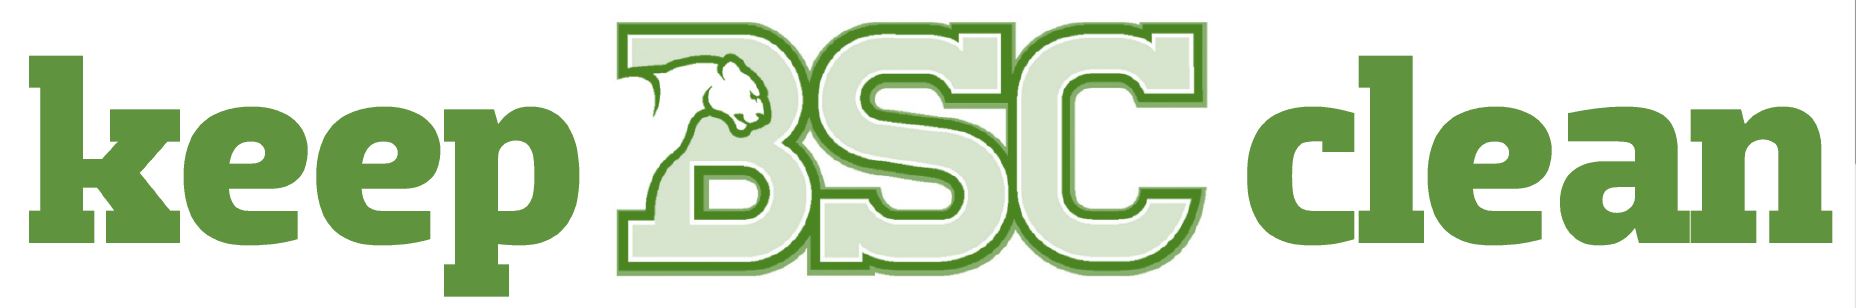 Keep-BSC-Clean-Recycling-Logo.JPG